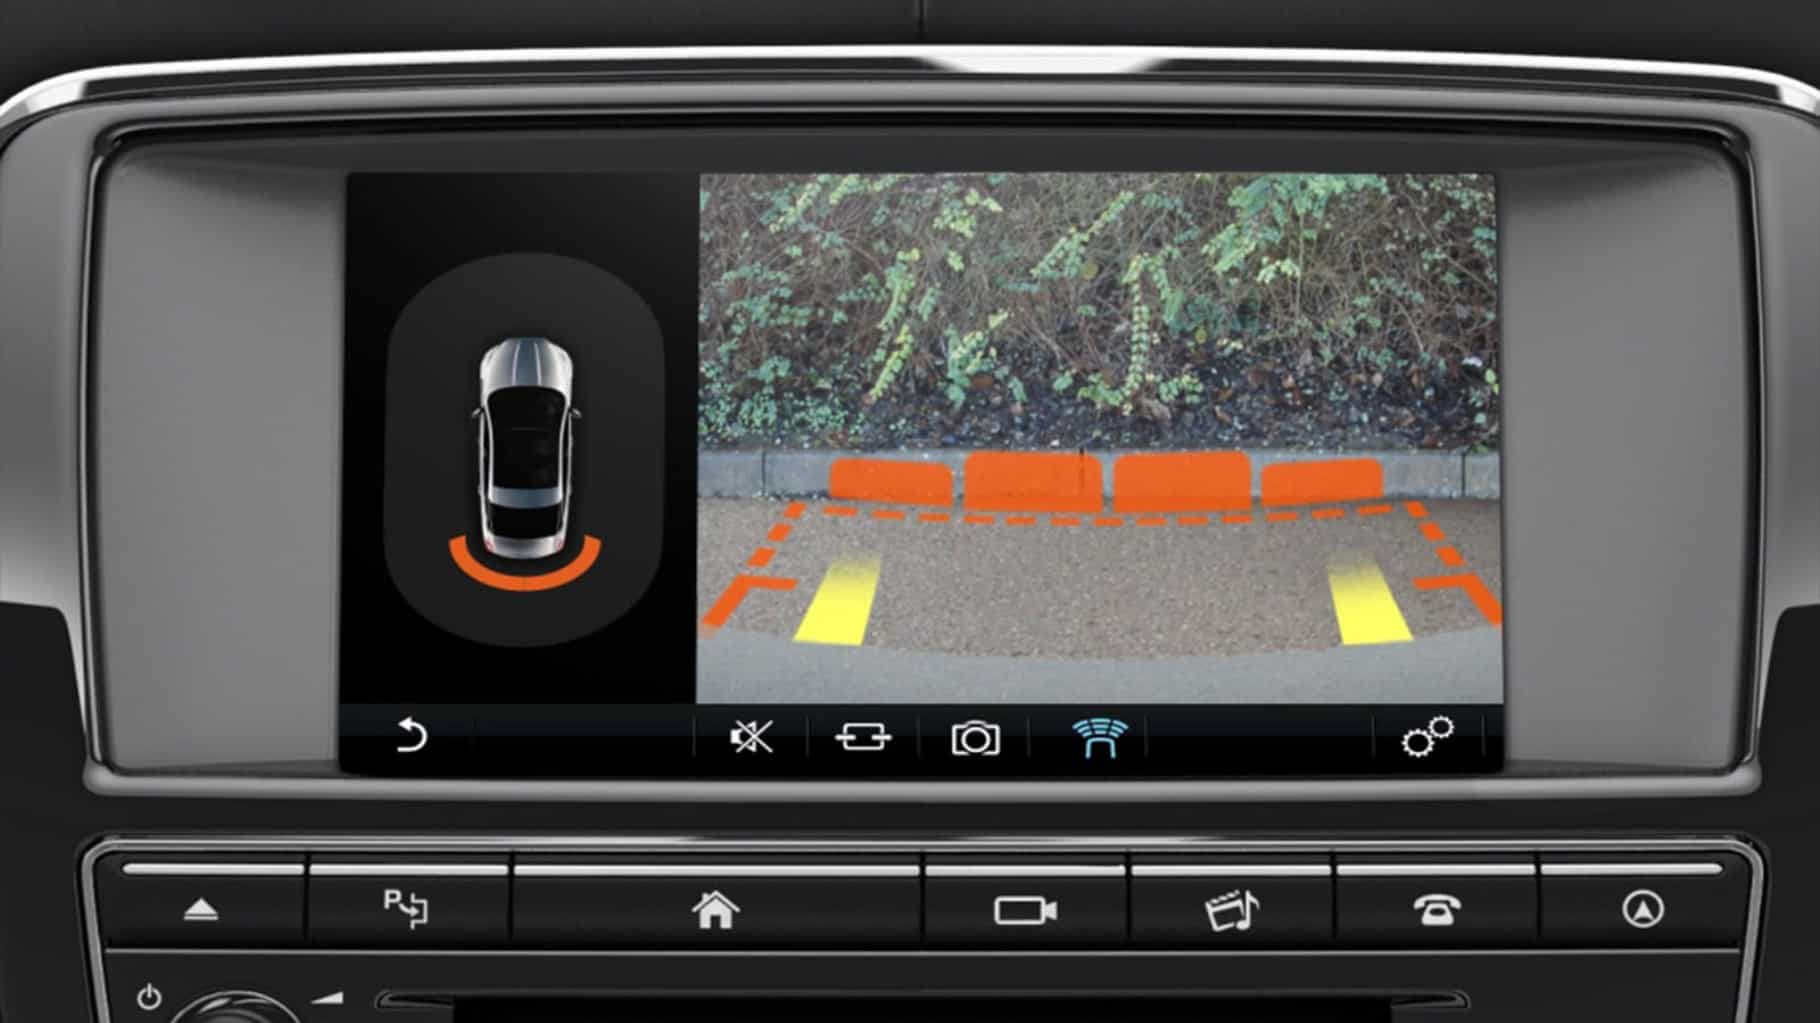  Jaguar XJ's InControl Touch Pro: Parking Aid System information video.